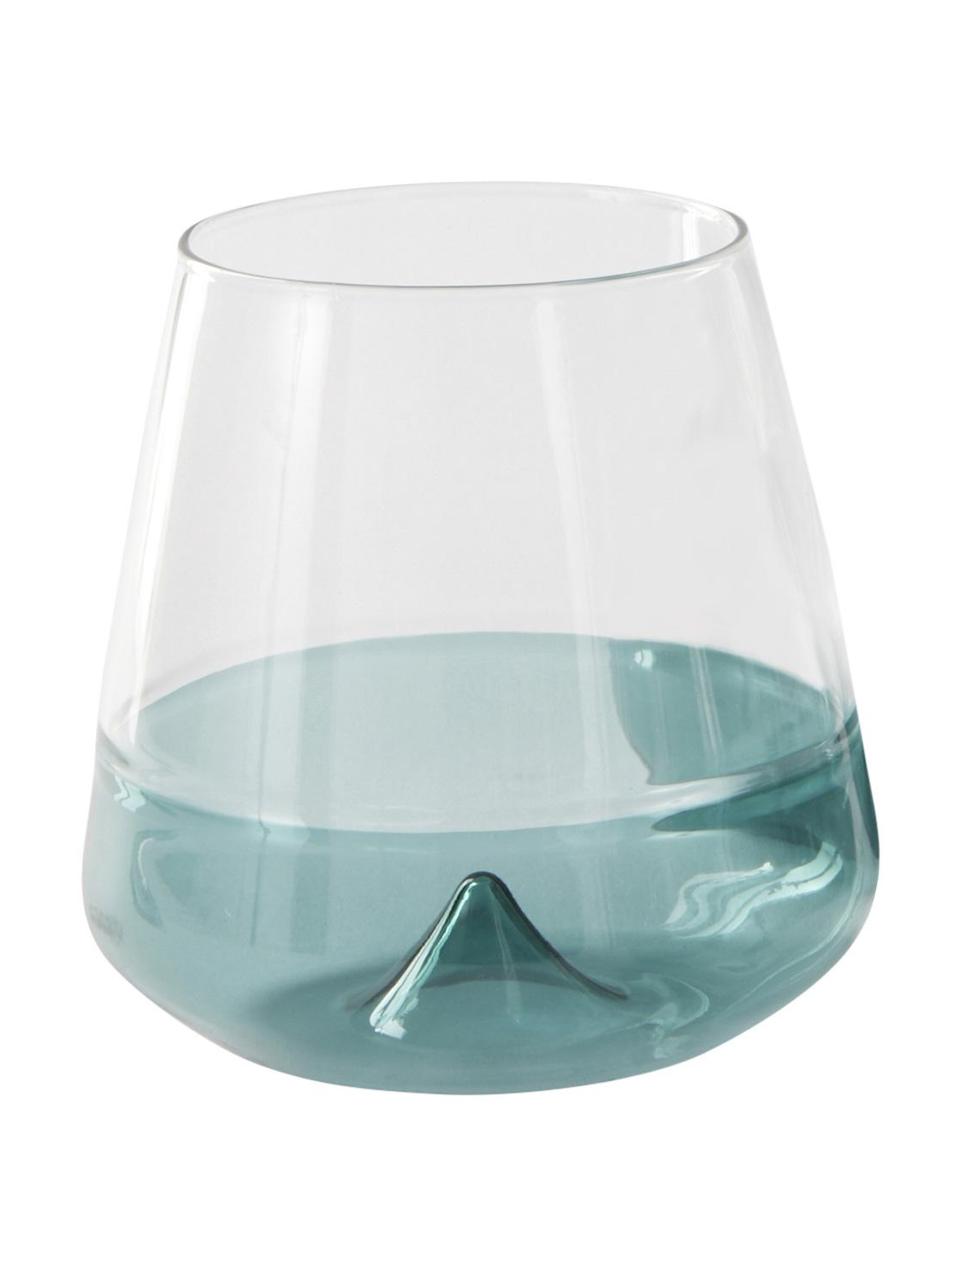 Waterglazen Dunya in blauw/transparant, 4 stuks, Glas, Blauw, Ø 9 x H 10 cm, 450 ml